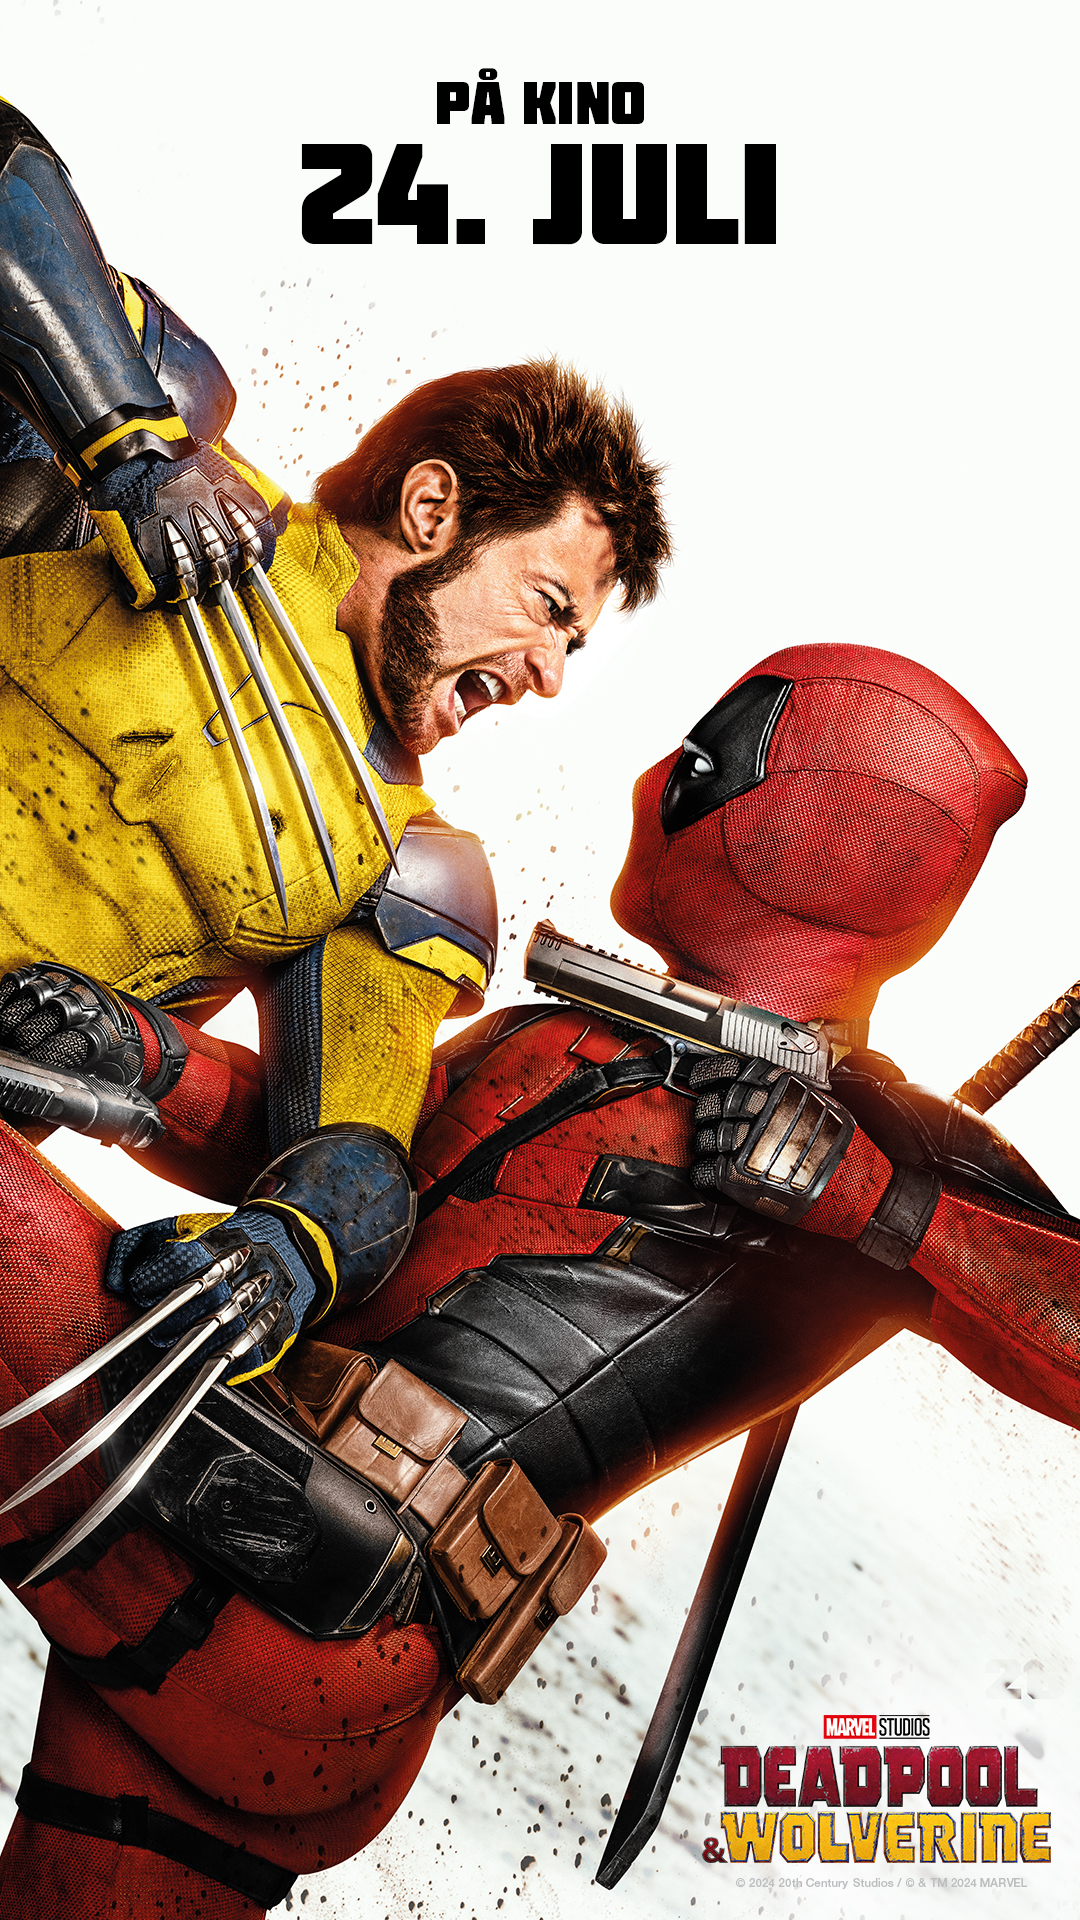 Kinoplakat for Deadpool & Wolverine